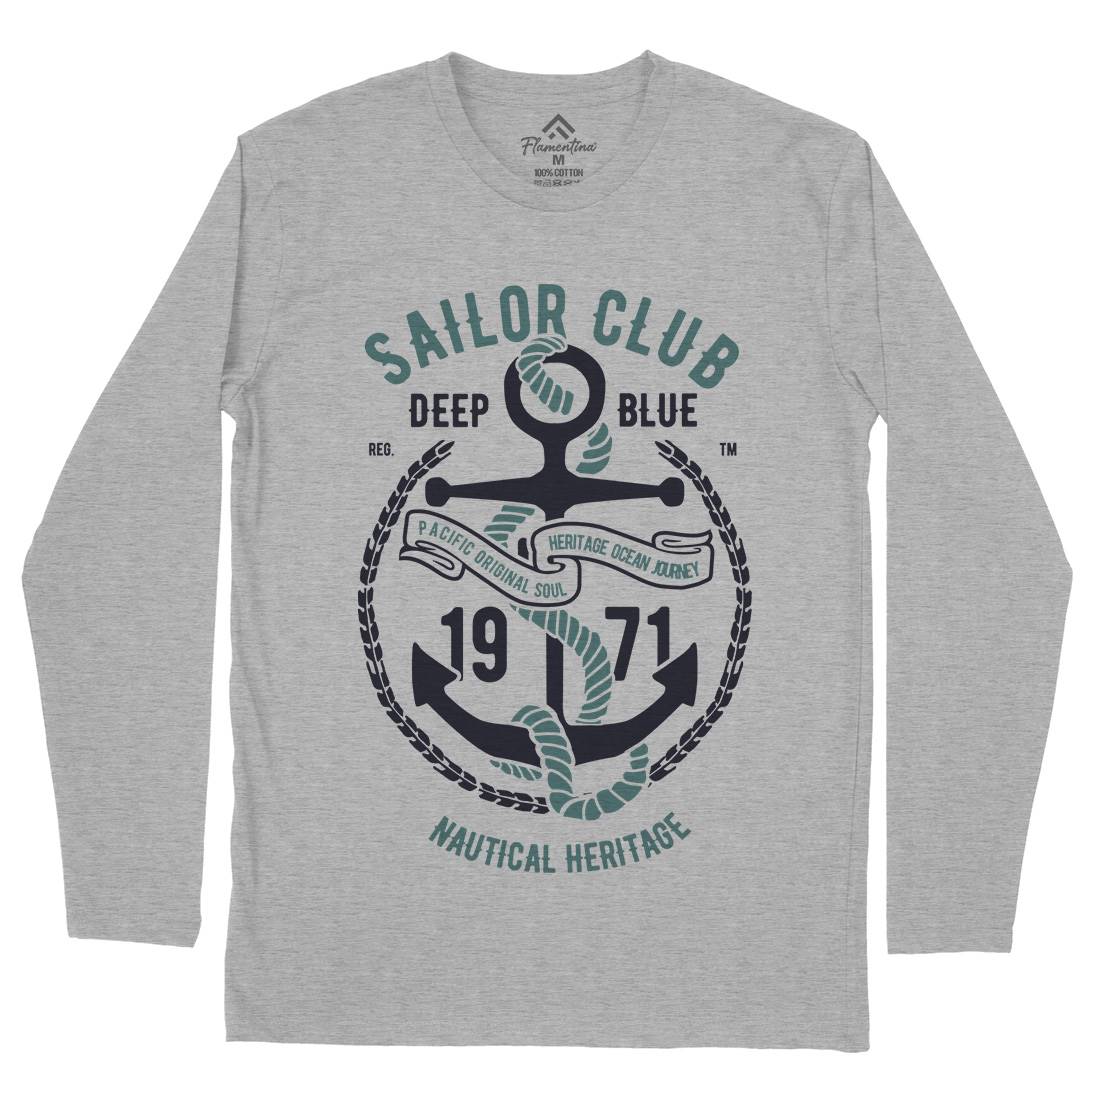 Sailor Club Mens Long Sleeve T-Shirt Navy B445